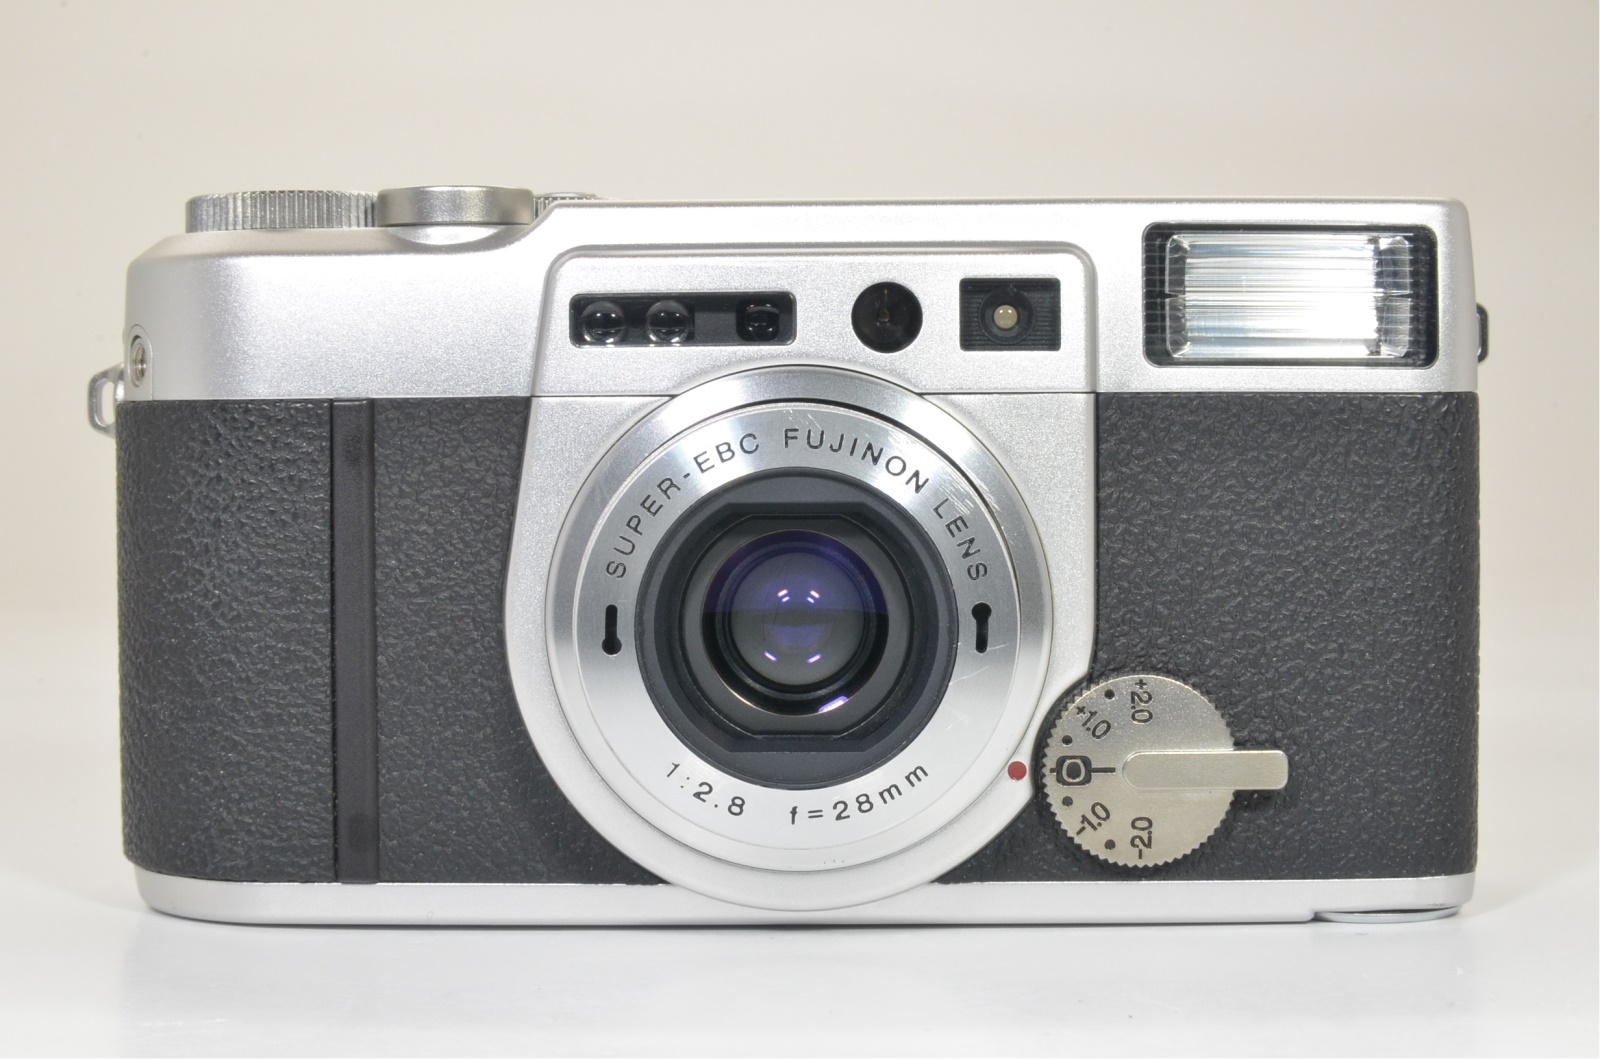 Fuji Fujifilm KLASSE W Silver 28mm film camera from Japan Shooting Tested SuperB JAPAN CAMERA